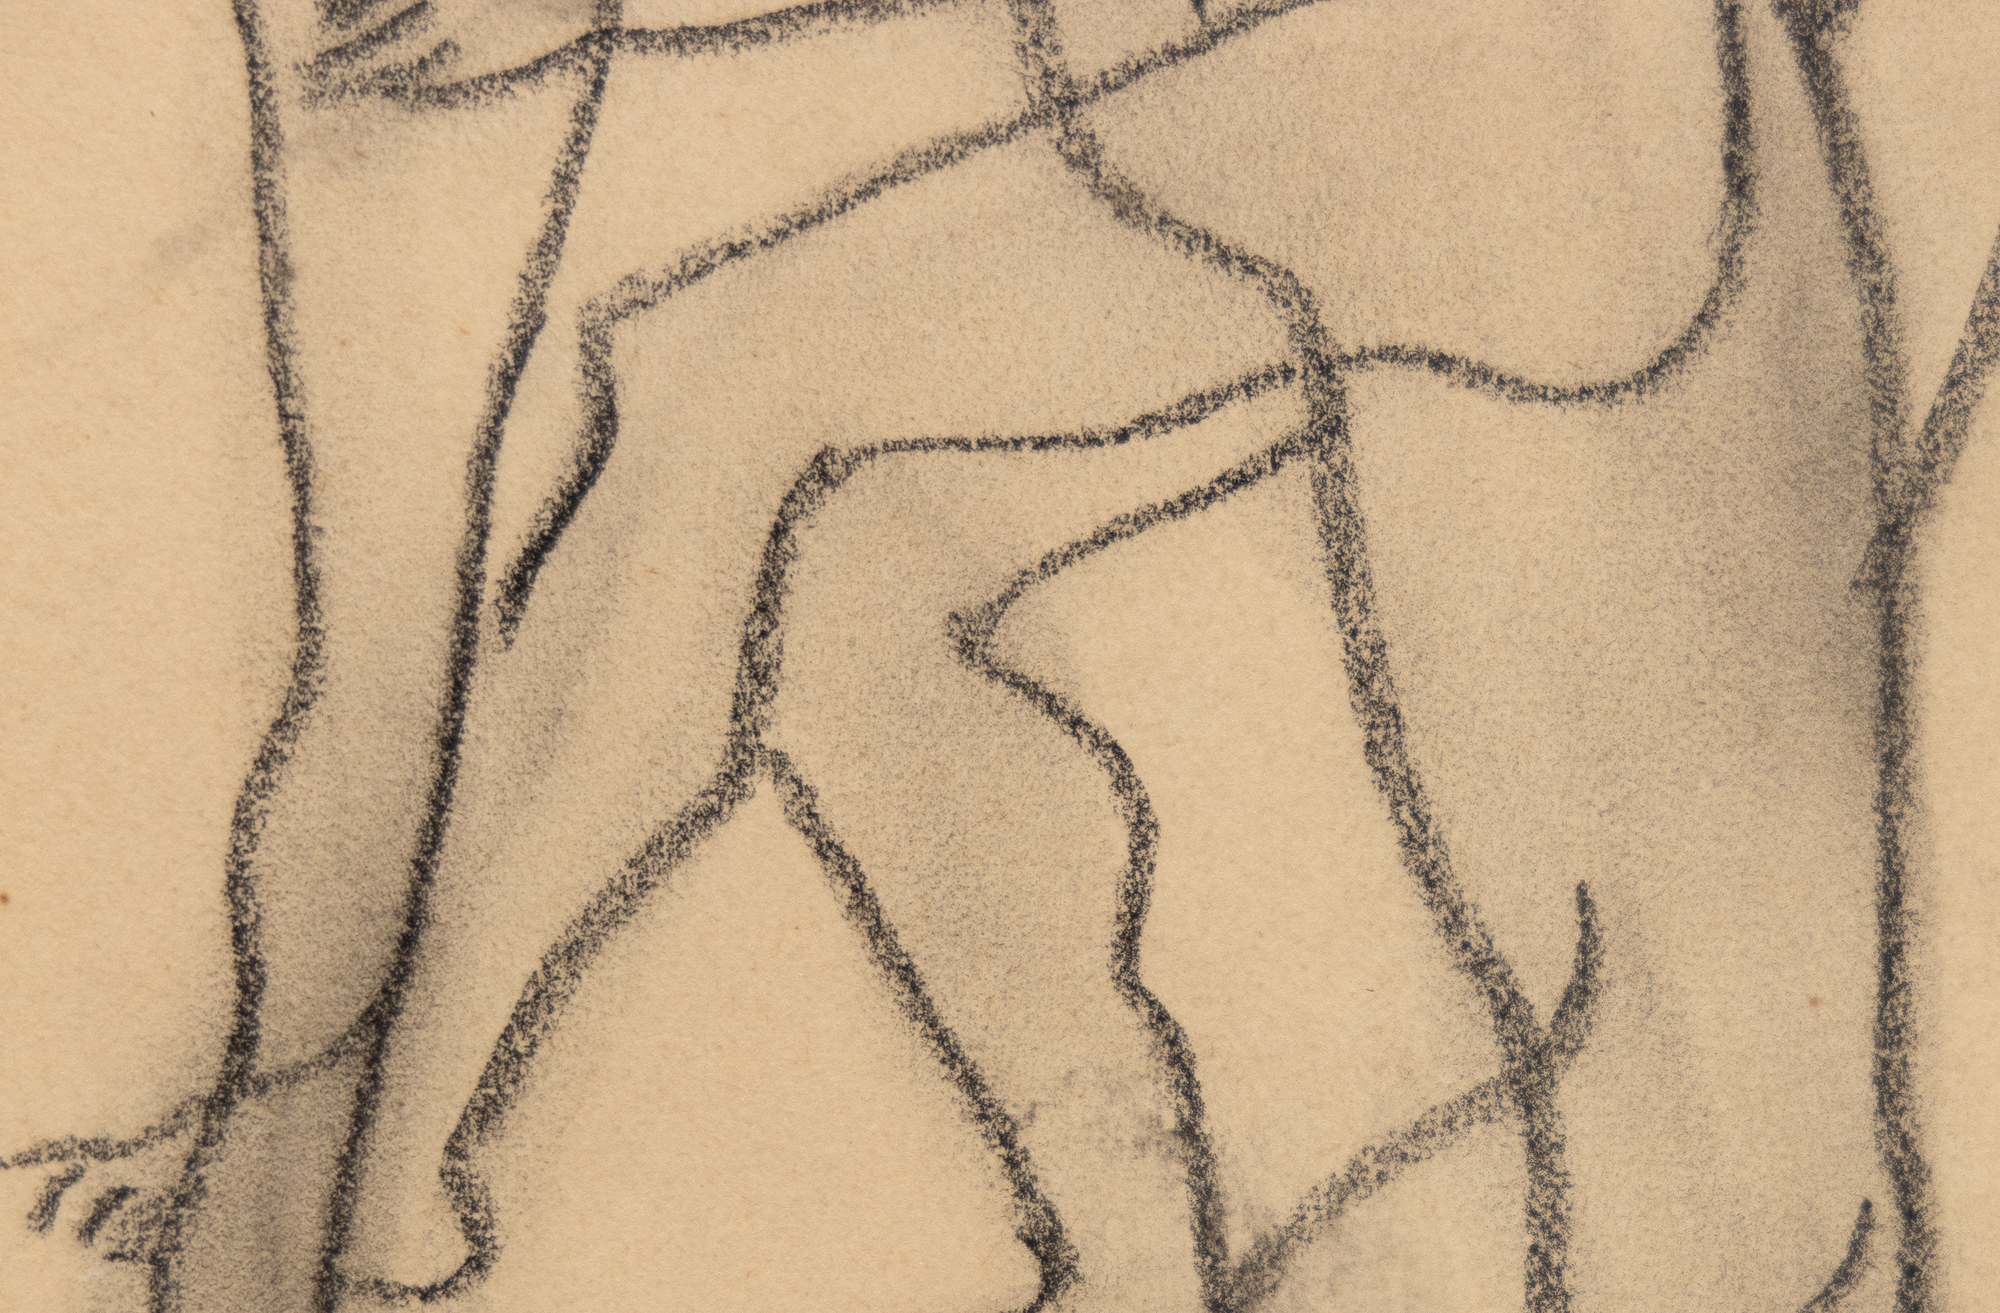 FRANCIS PICABIA - Trois personnages nus - crayón conte negro sobre papel buff - 11 1/2 x 8 in.